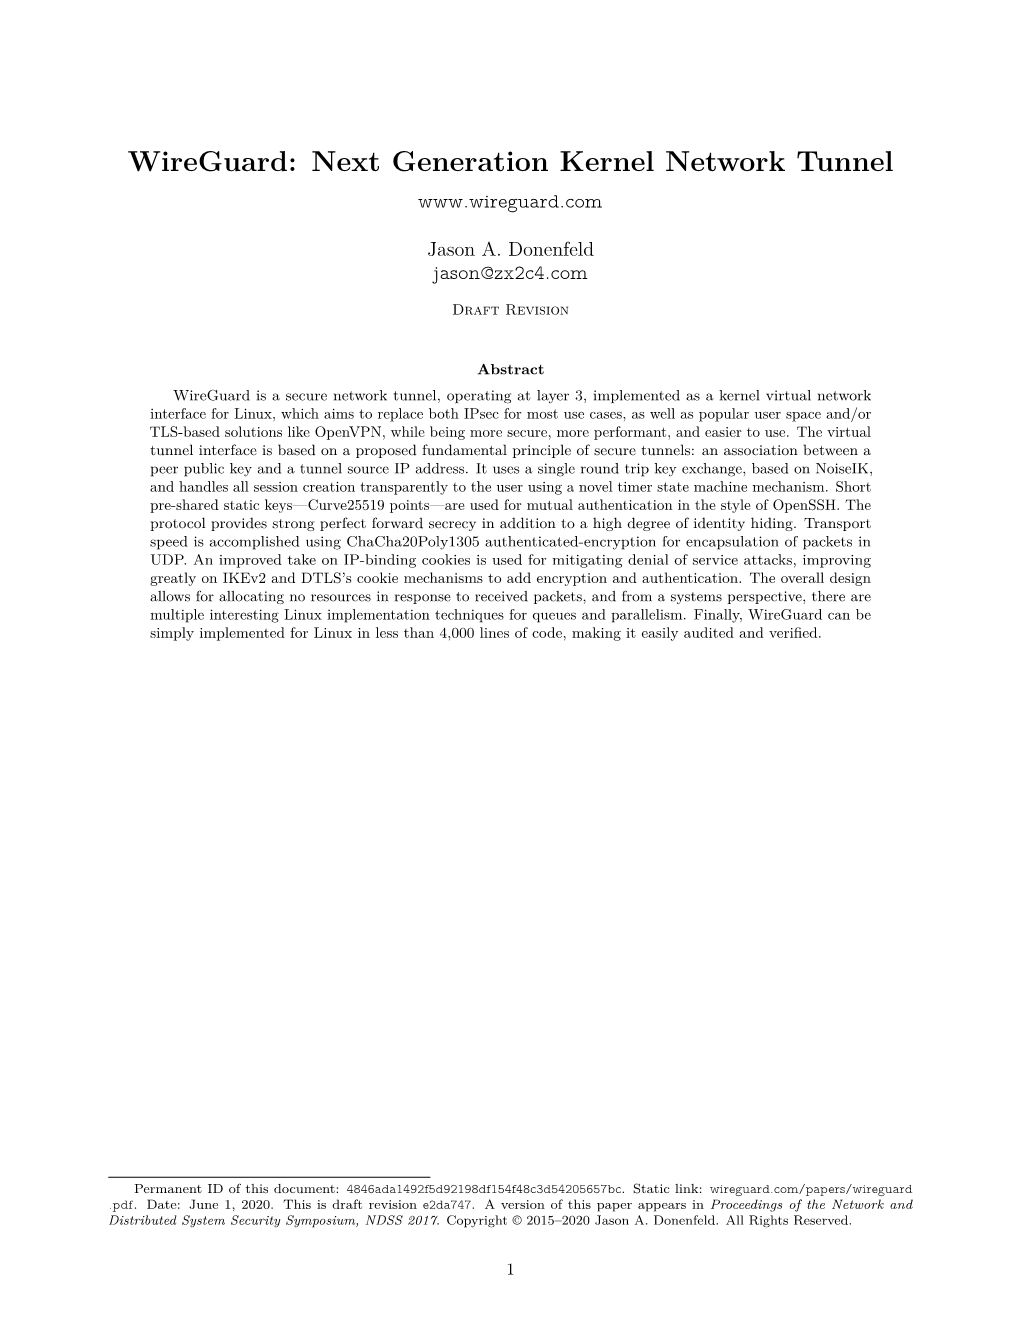 Next Generation Kernel Network Tunnel